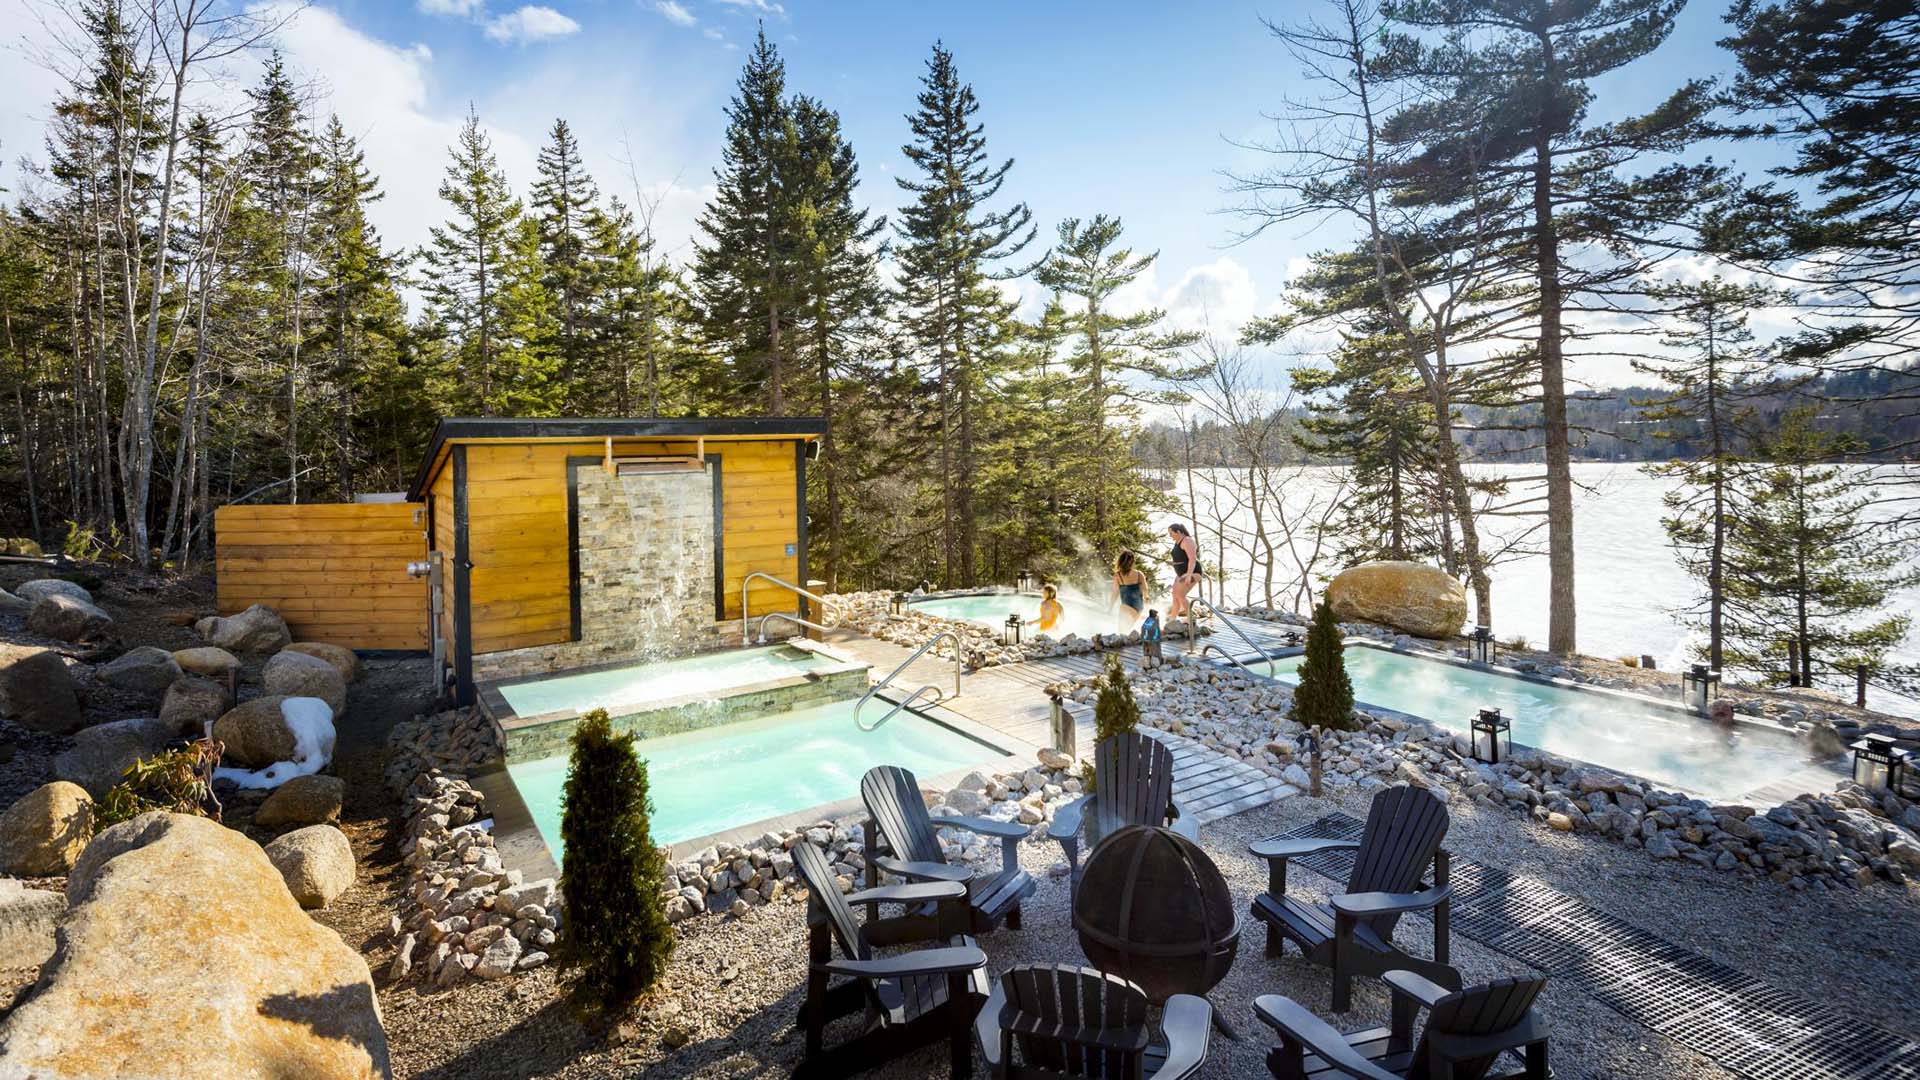 Nova Scotia Winter Getaways with an Outdoor Hot Tub